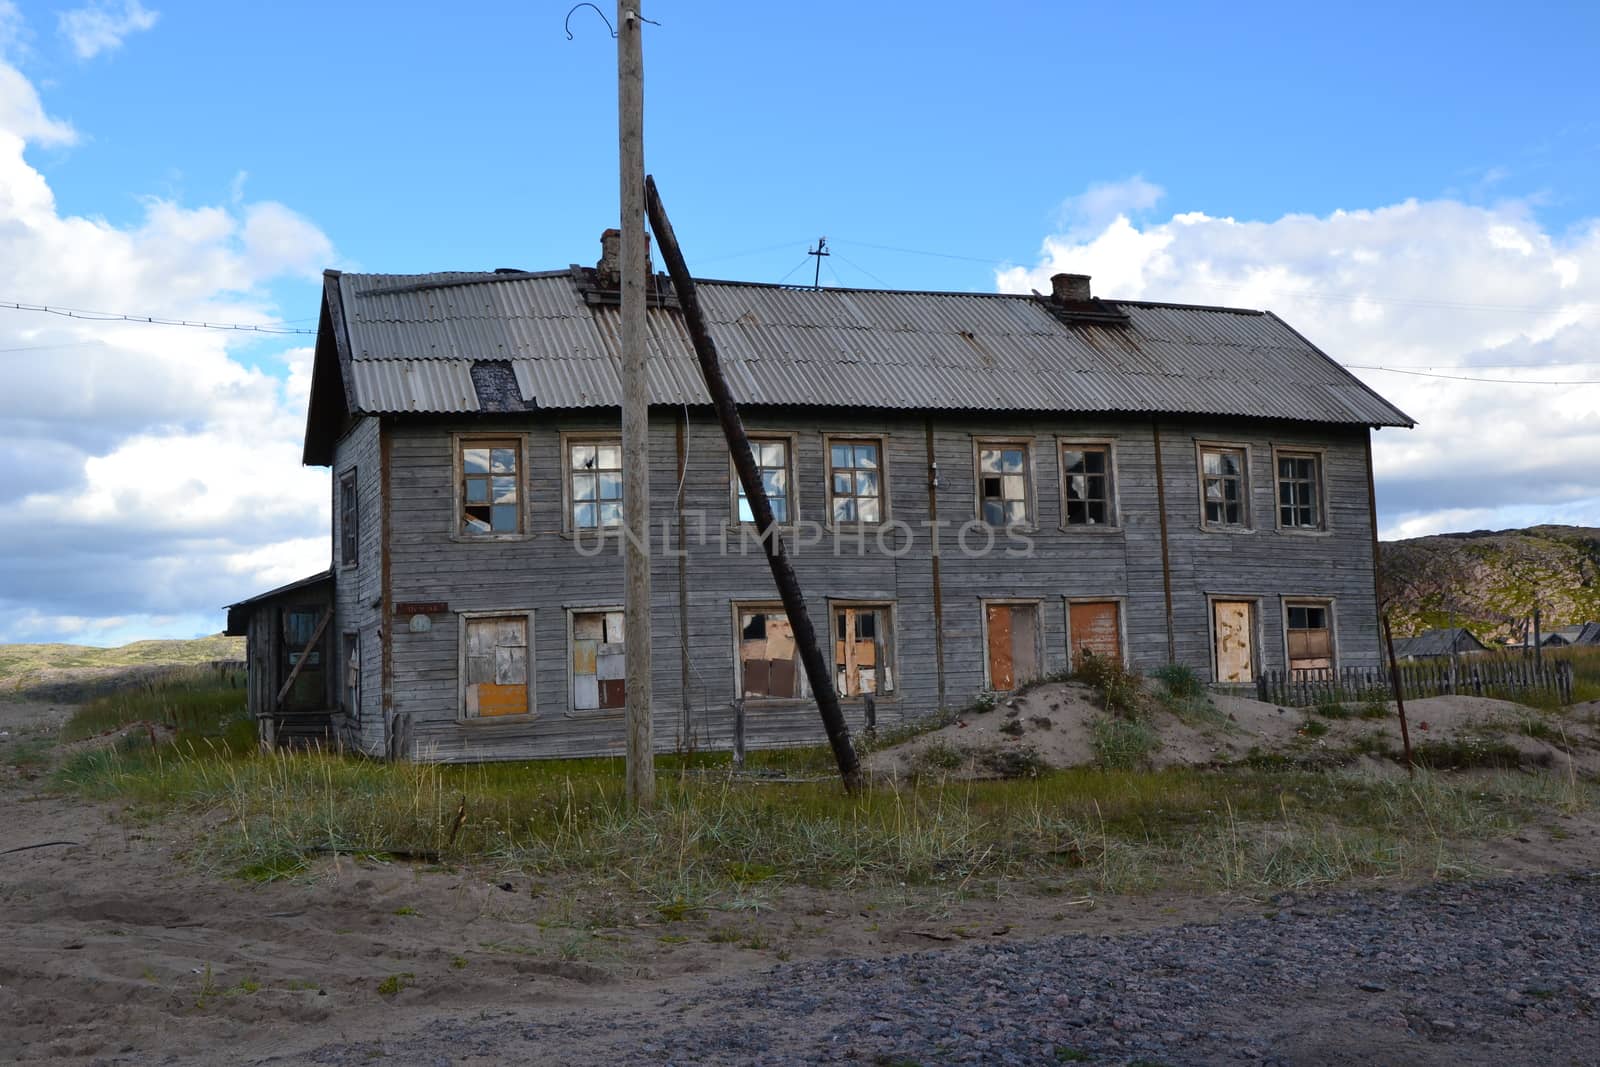 Old house in tundra Murmansk region by ruv86